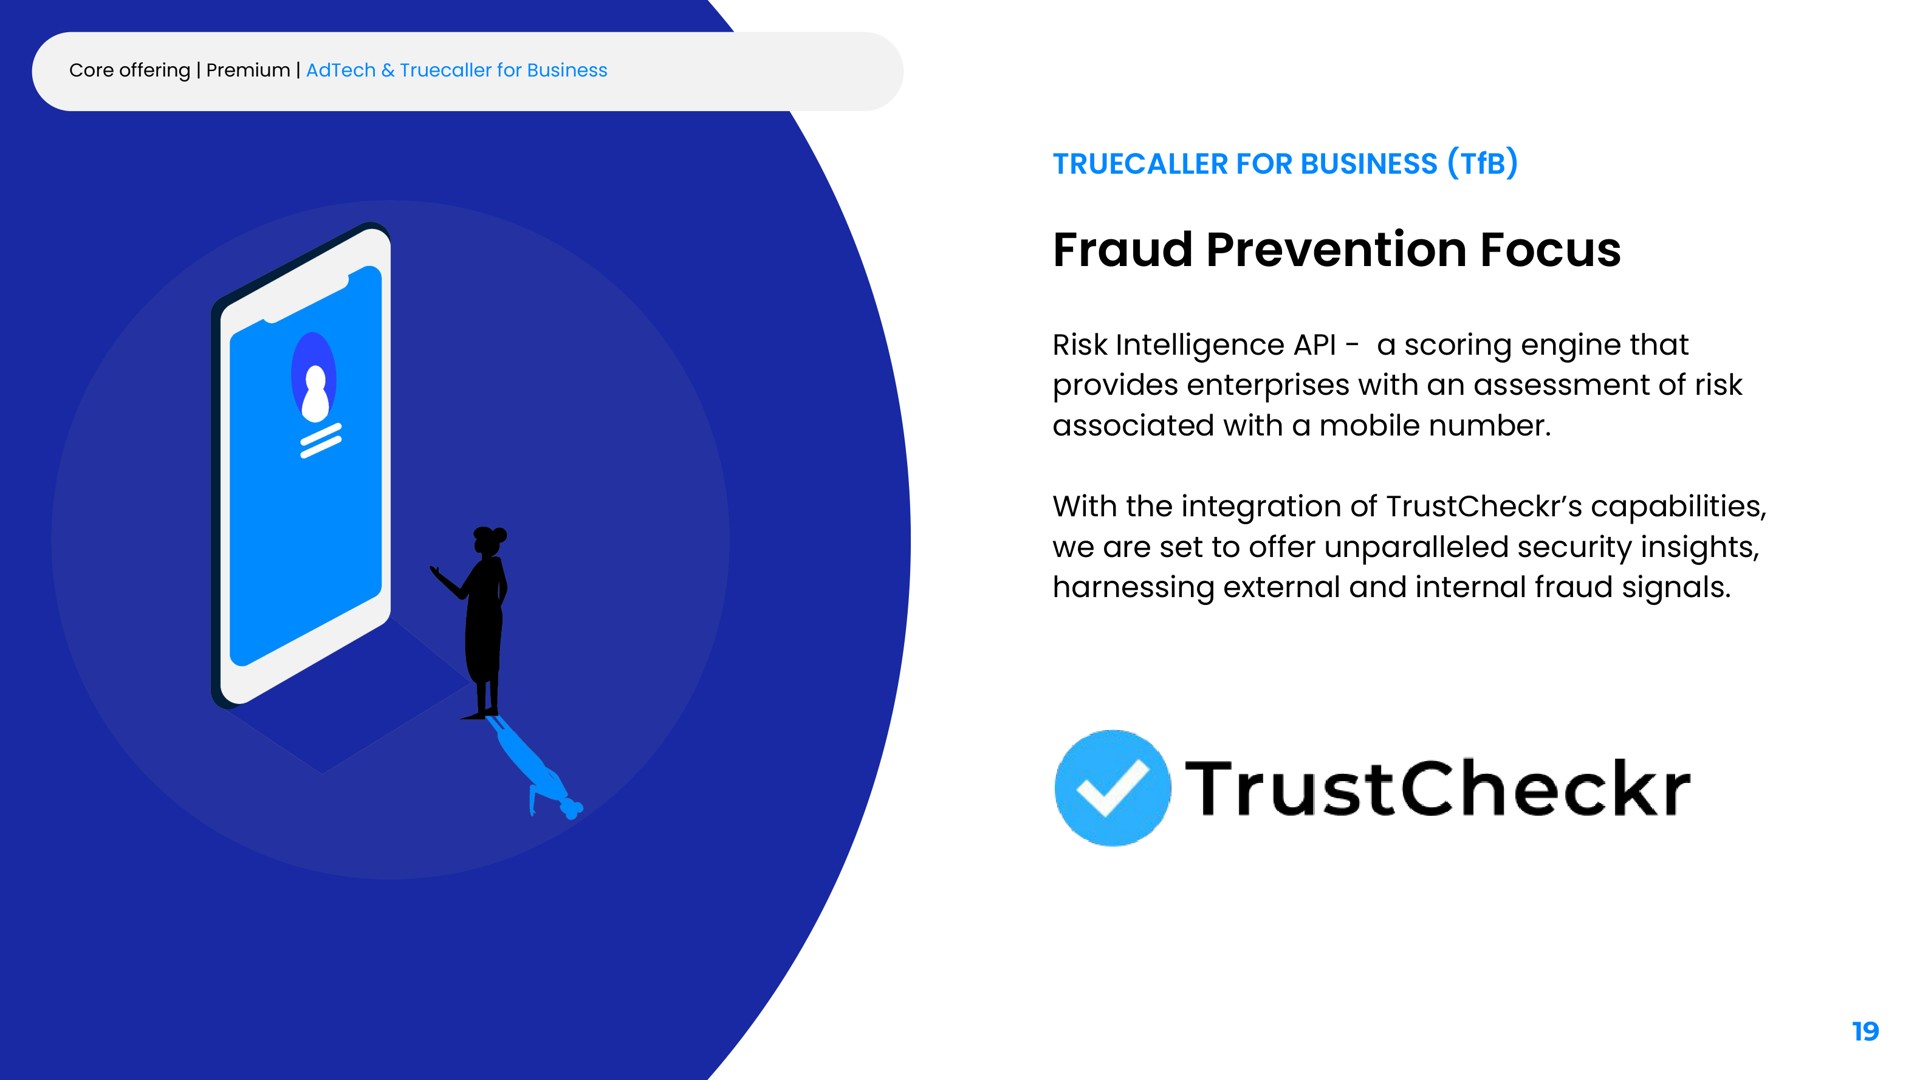 fraud prevention focus | Truecaller